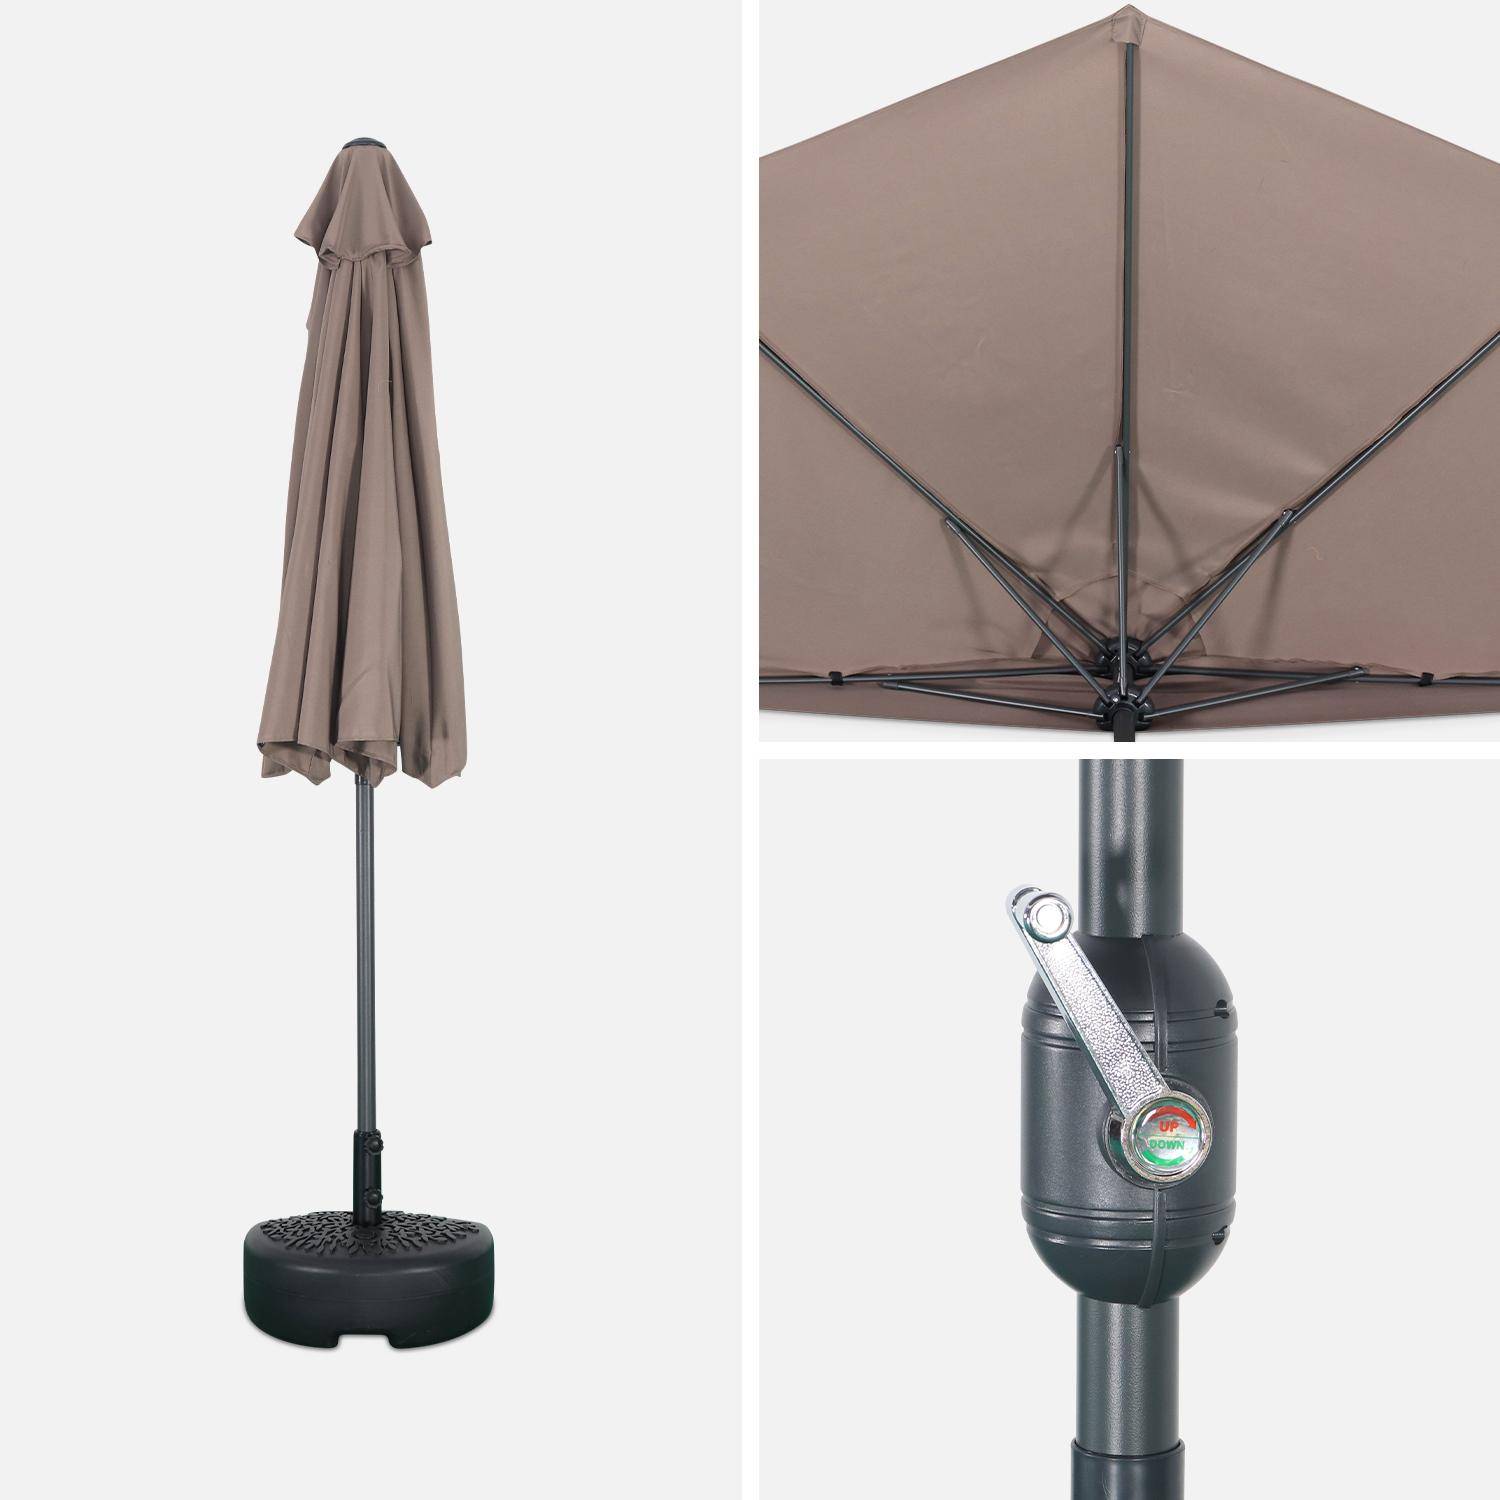 Ø250cm Half parasol for balcony - half-parasol, aluminium pole, crank - Calvi - Beige-brown,sweeek,Photo5